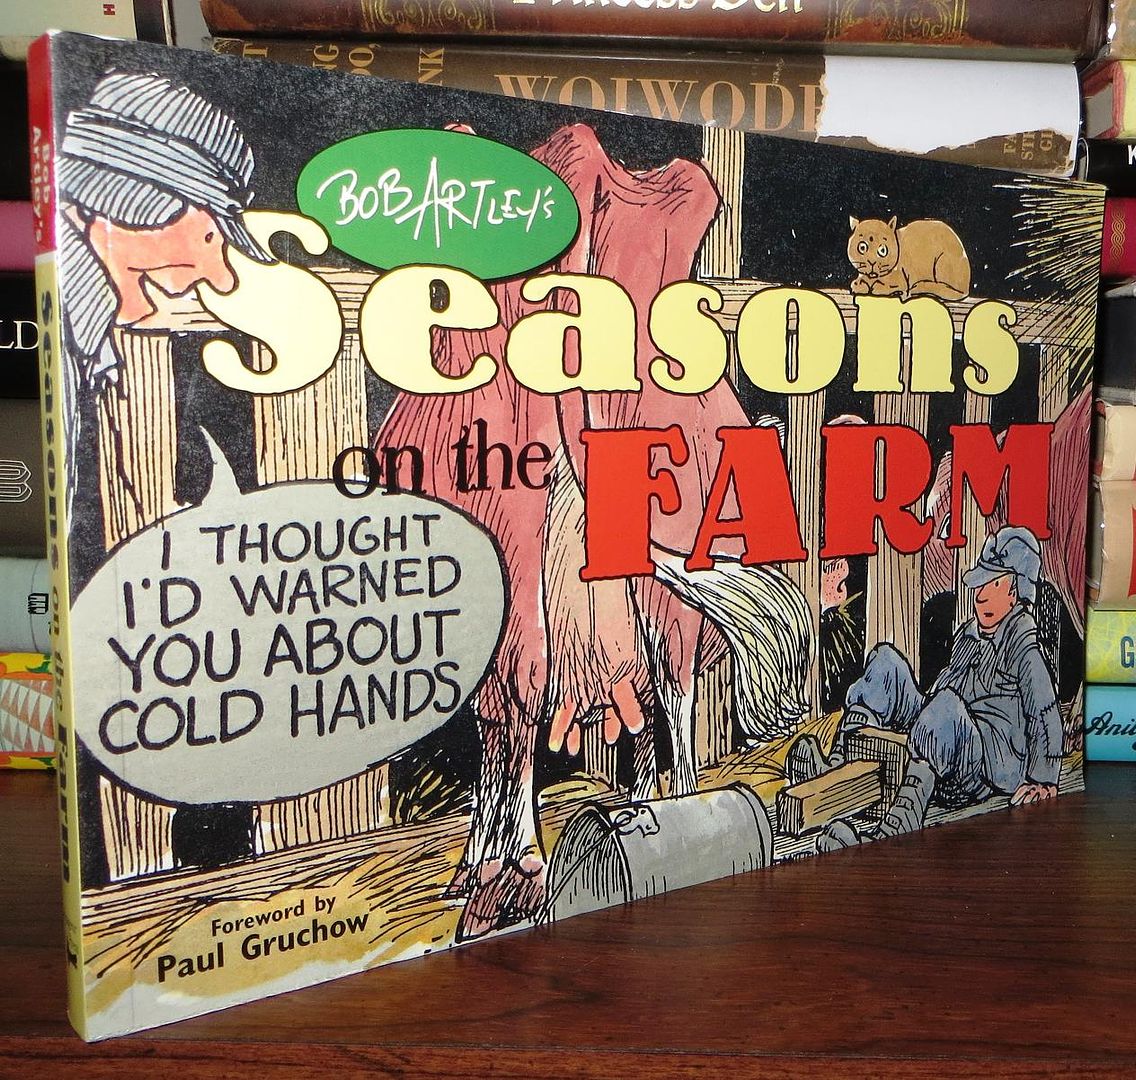 ARTLEY, BOB - Bob Artley's Seasons on the Farm